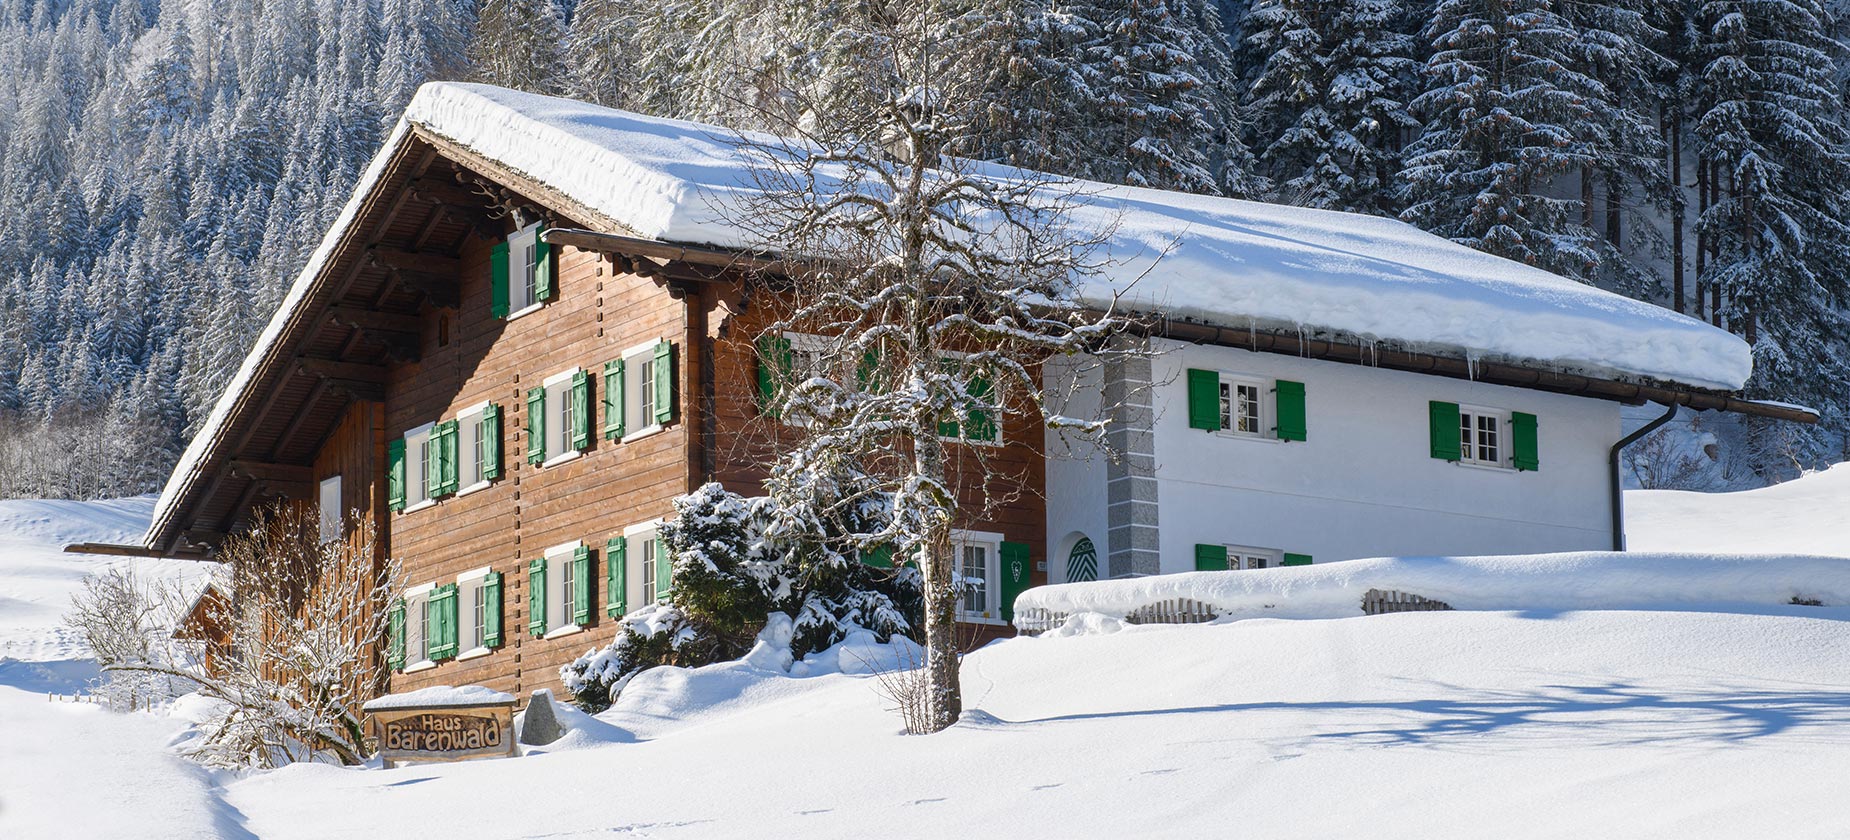 Country lodge Bärenwald winter